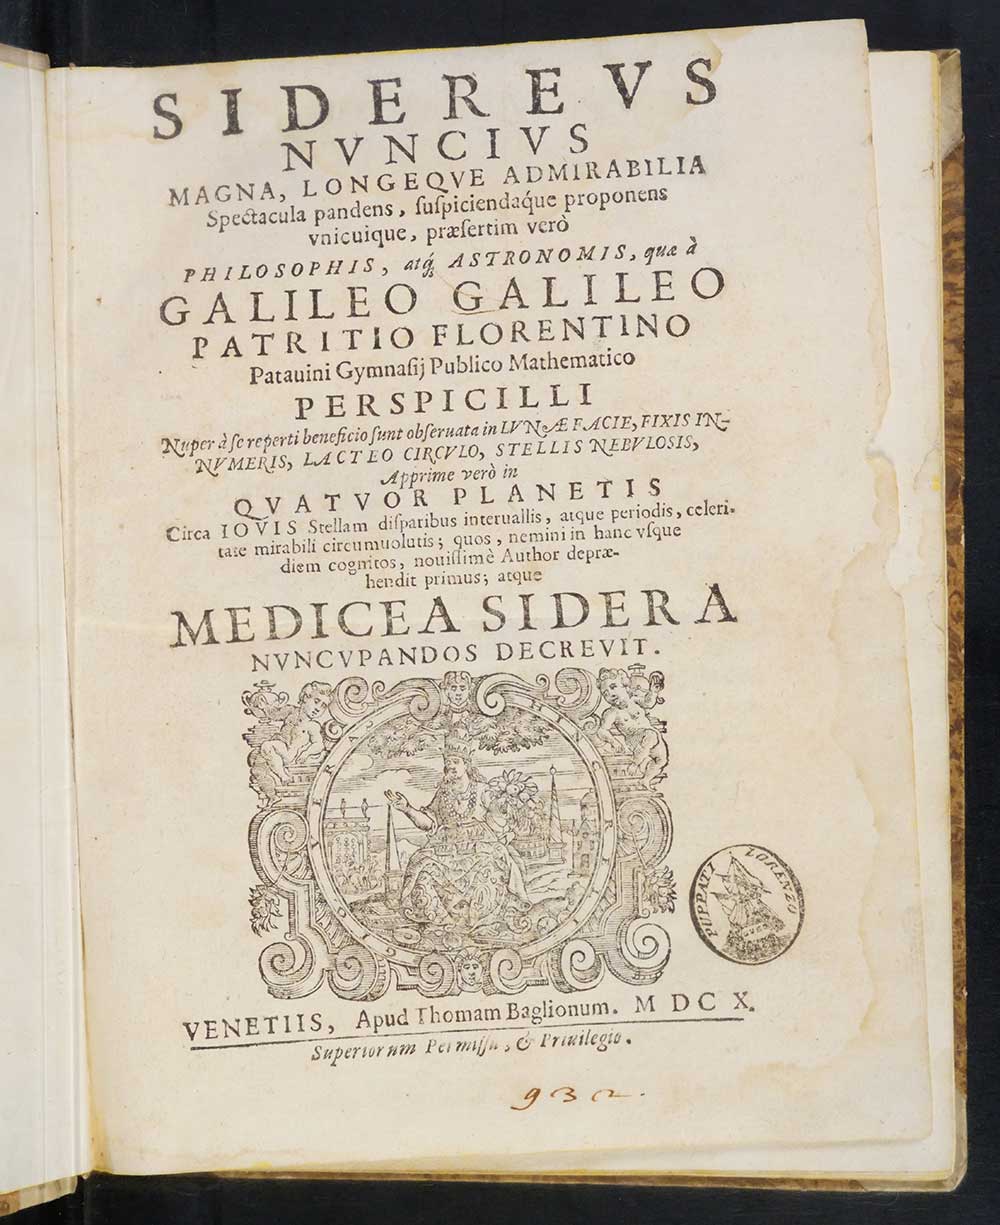 Title page, ordinary paper issue, Venice edition, Sidereus nuncius